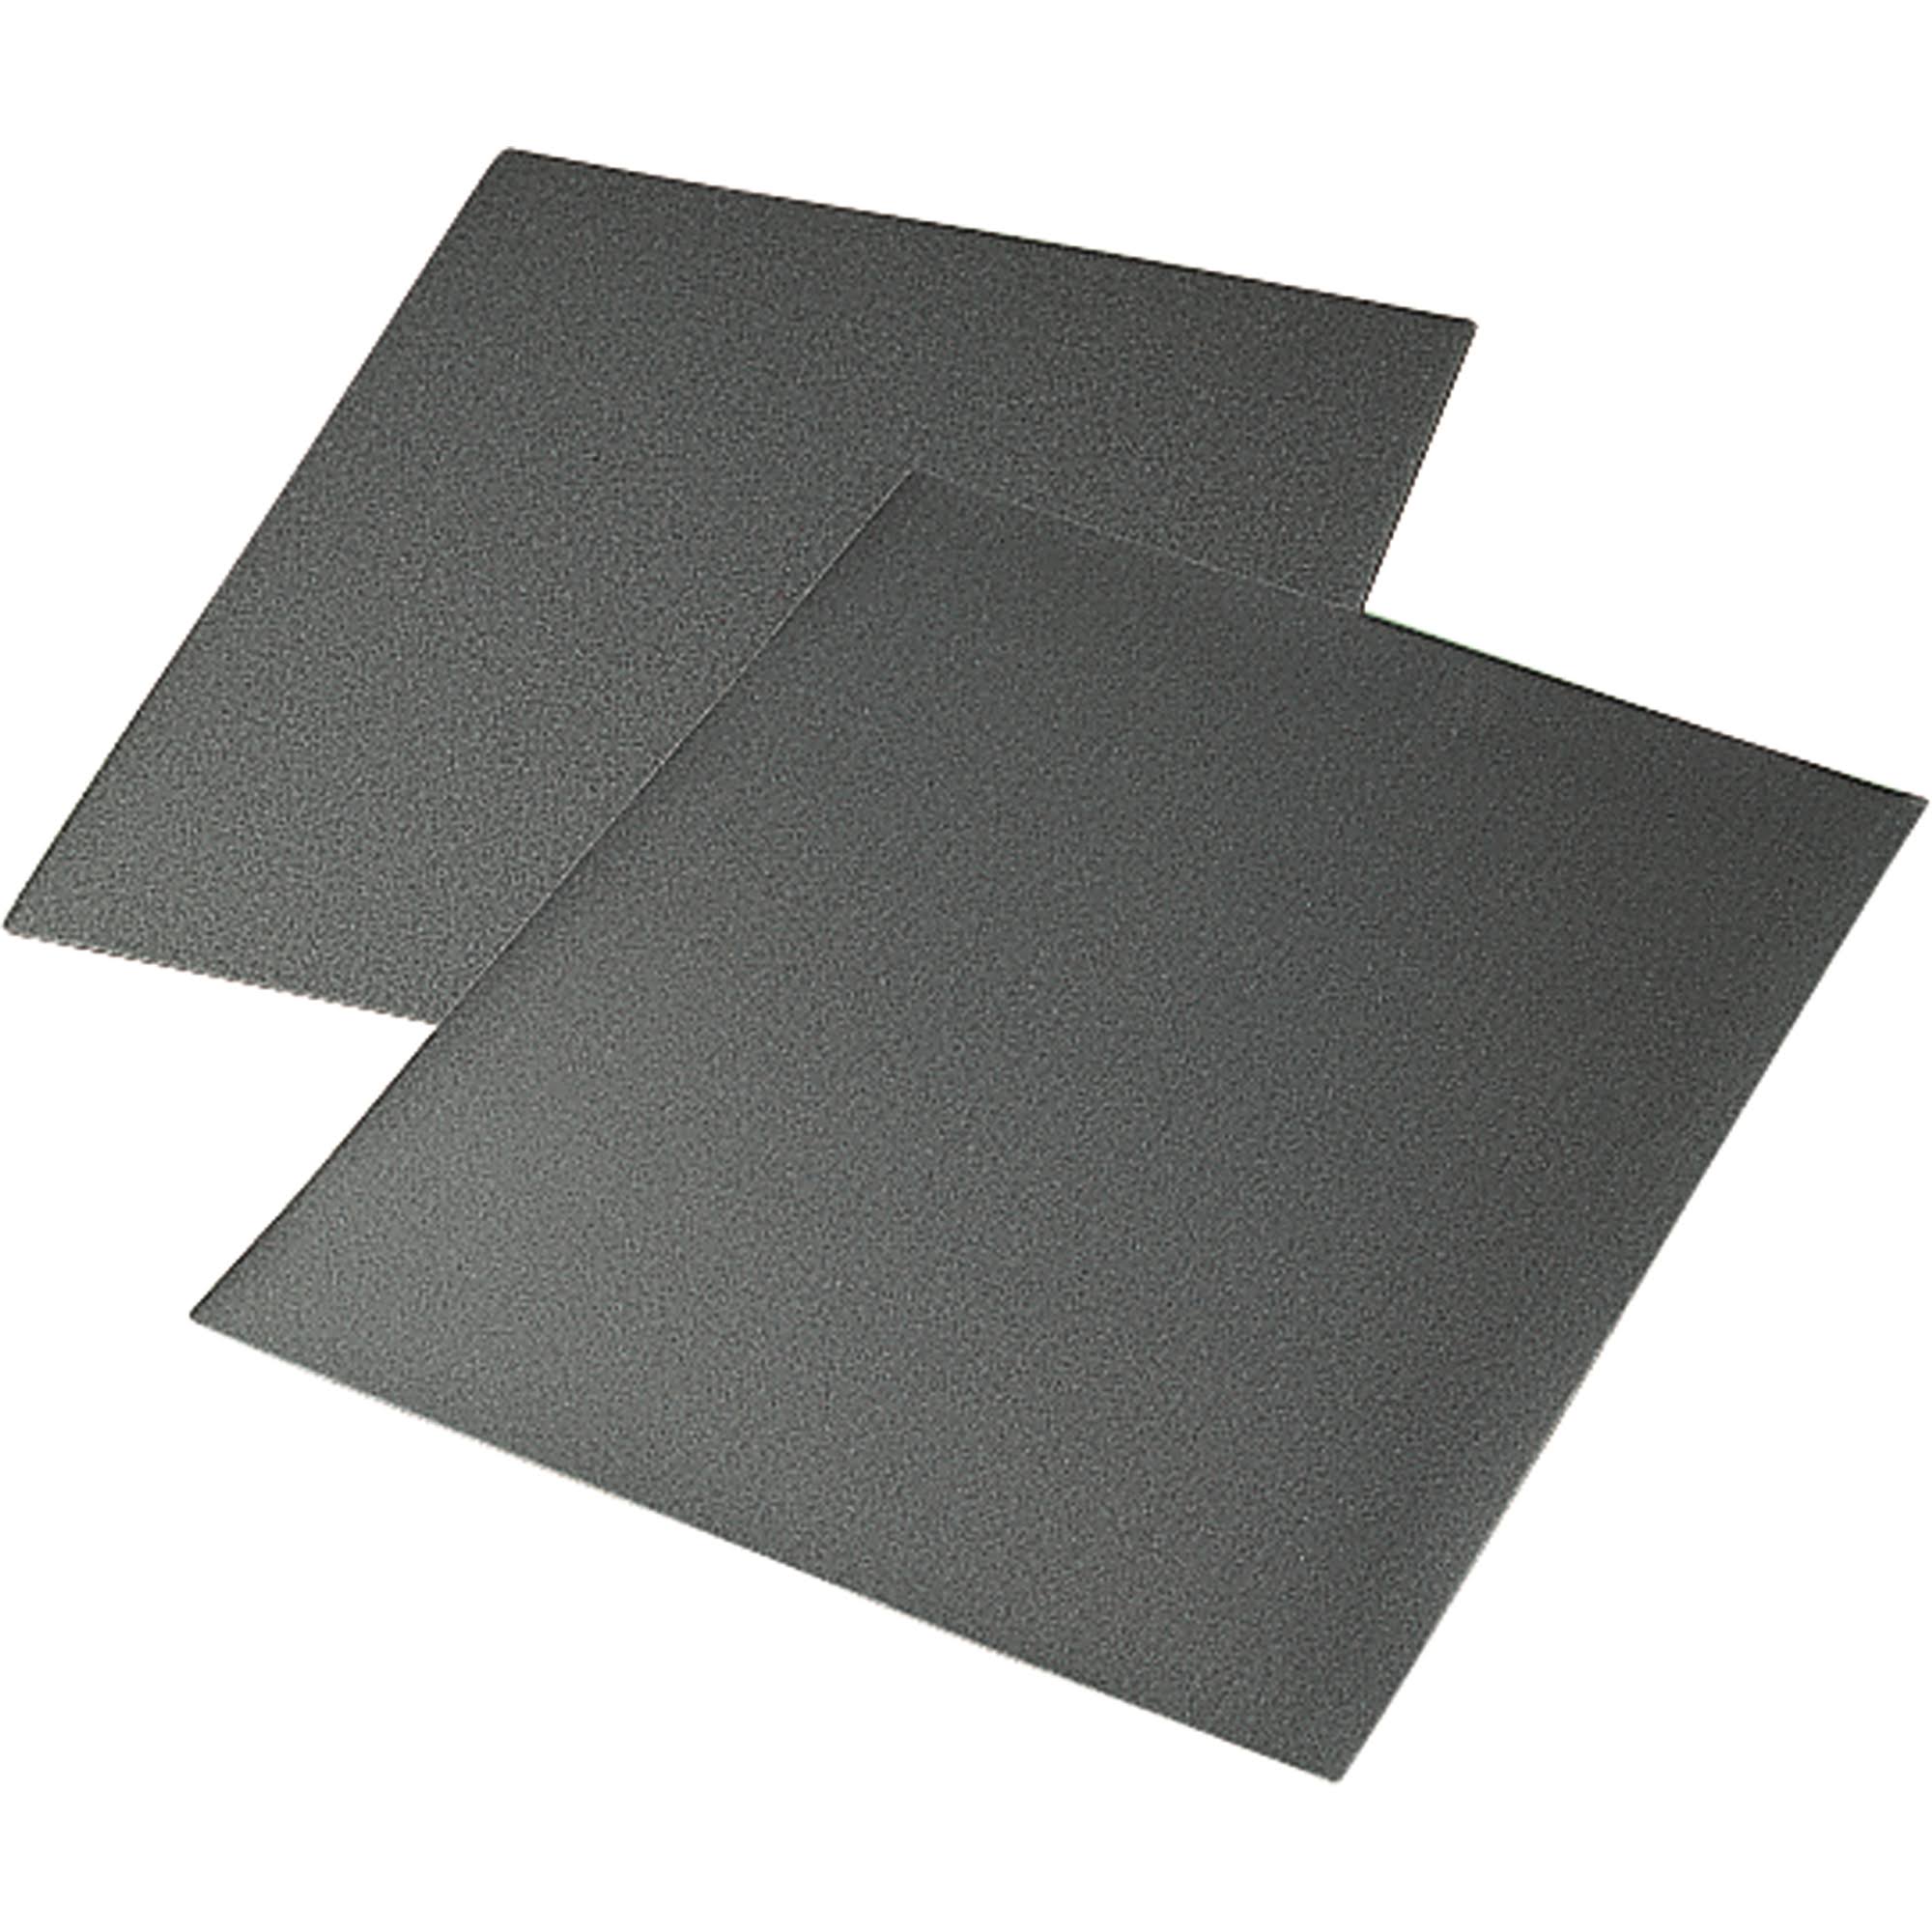 3M Wetordry Sandpaper Sheets - 9"x11", 25 Pack